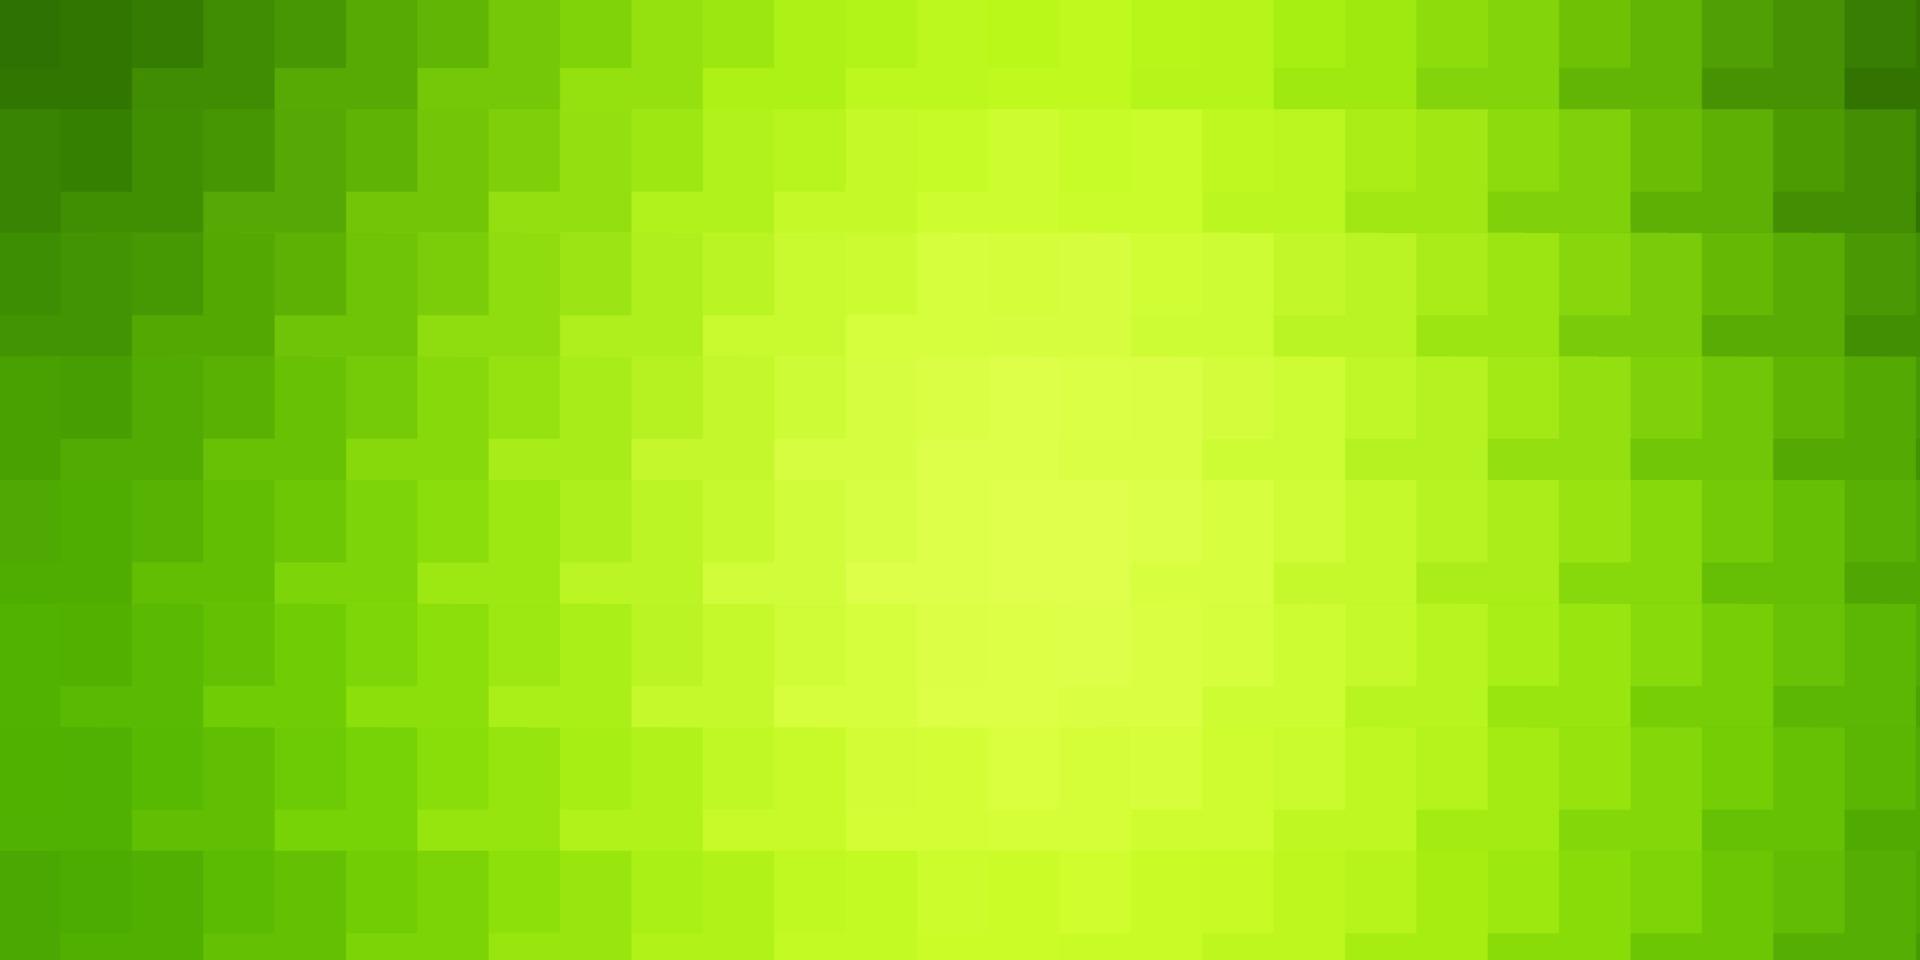 hellgrüne, gelbe Vektorschablone in Rechtecken. vektor